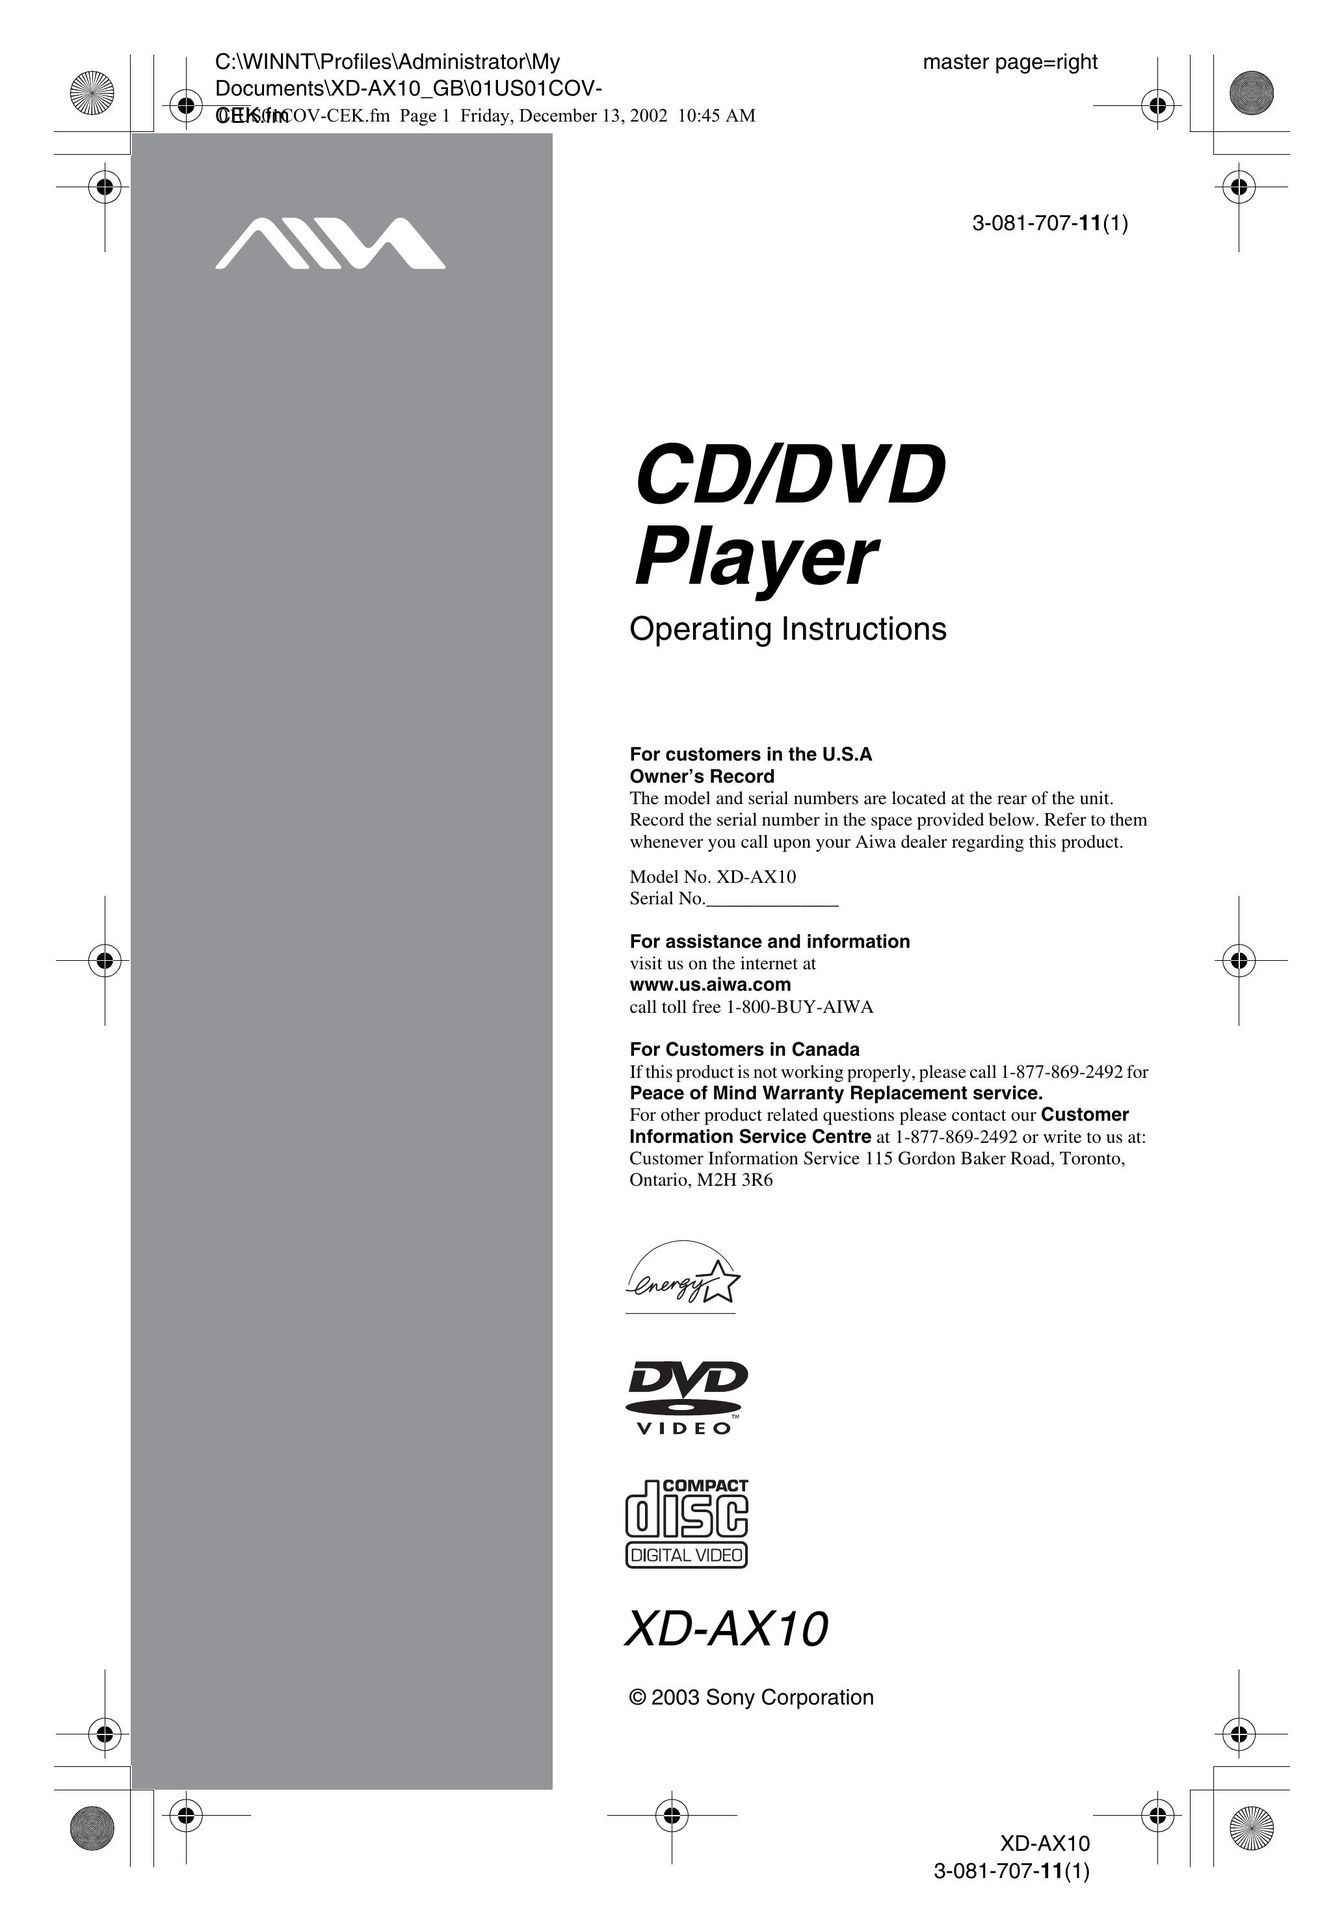 Aiwa XD-AX10 DVD Player User Manual